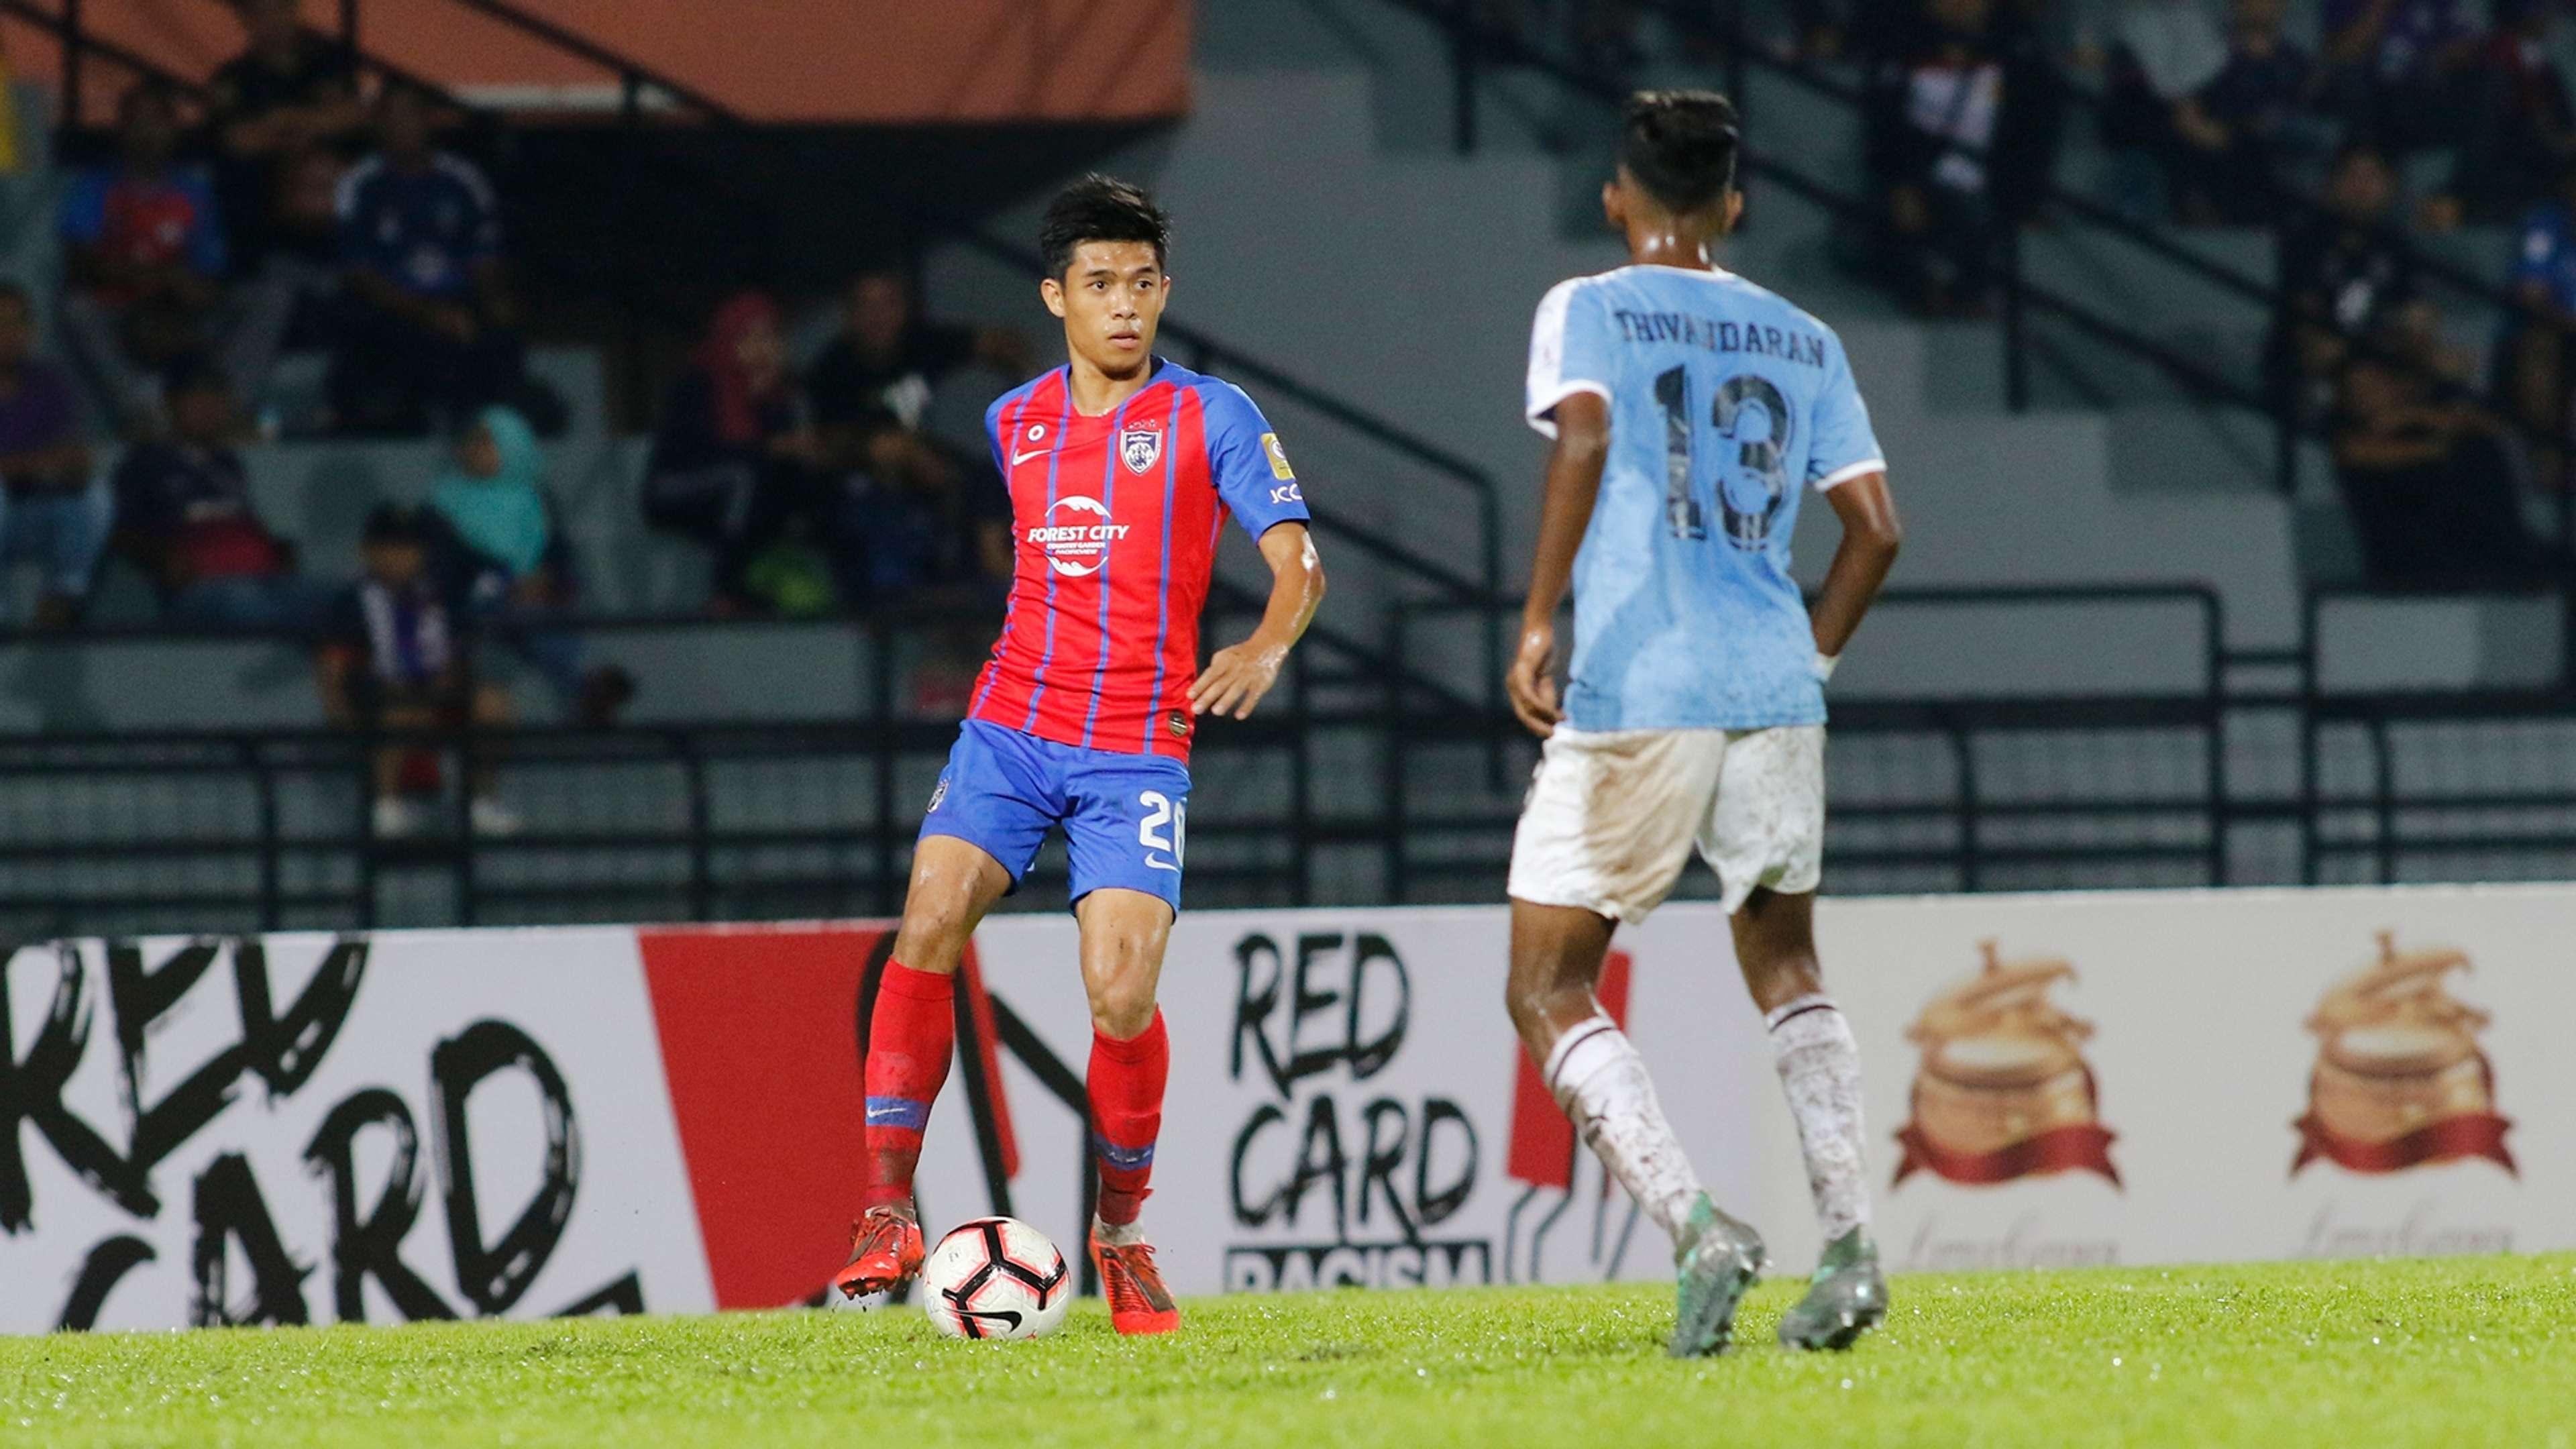 Syafiq Ahmad, PJ City FC v Johor Darul Ta'zim, Malaysia Super League, 13 Apr 2019